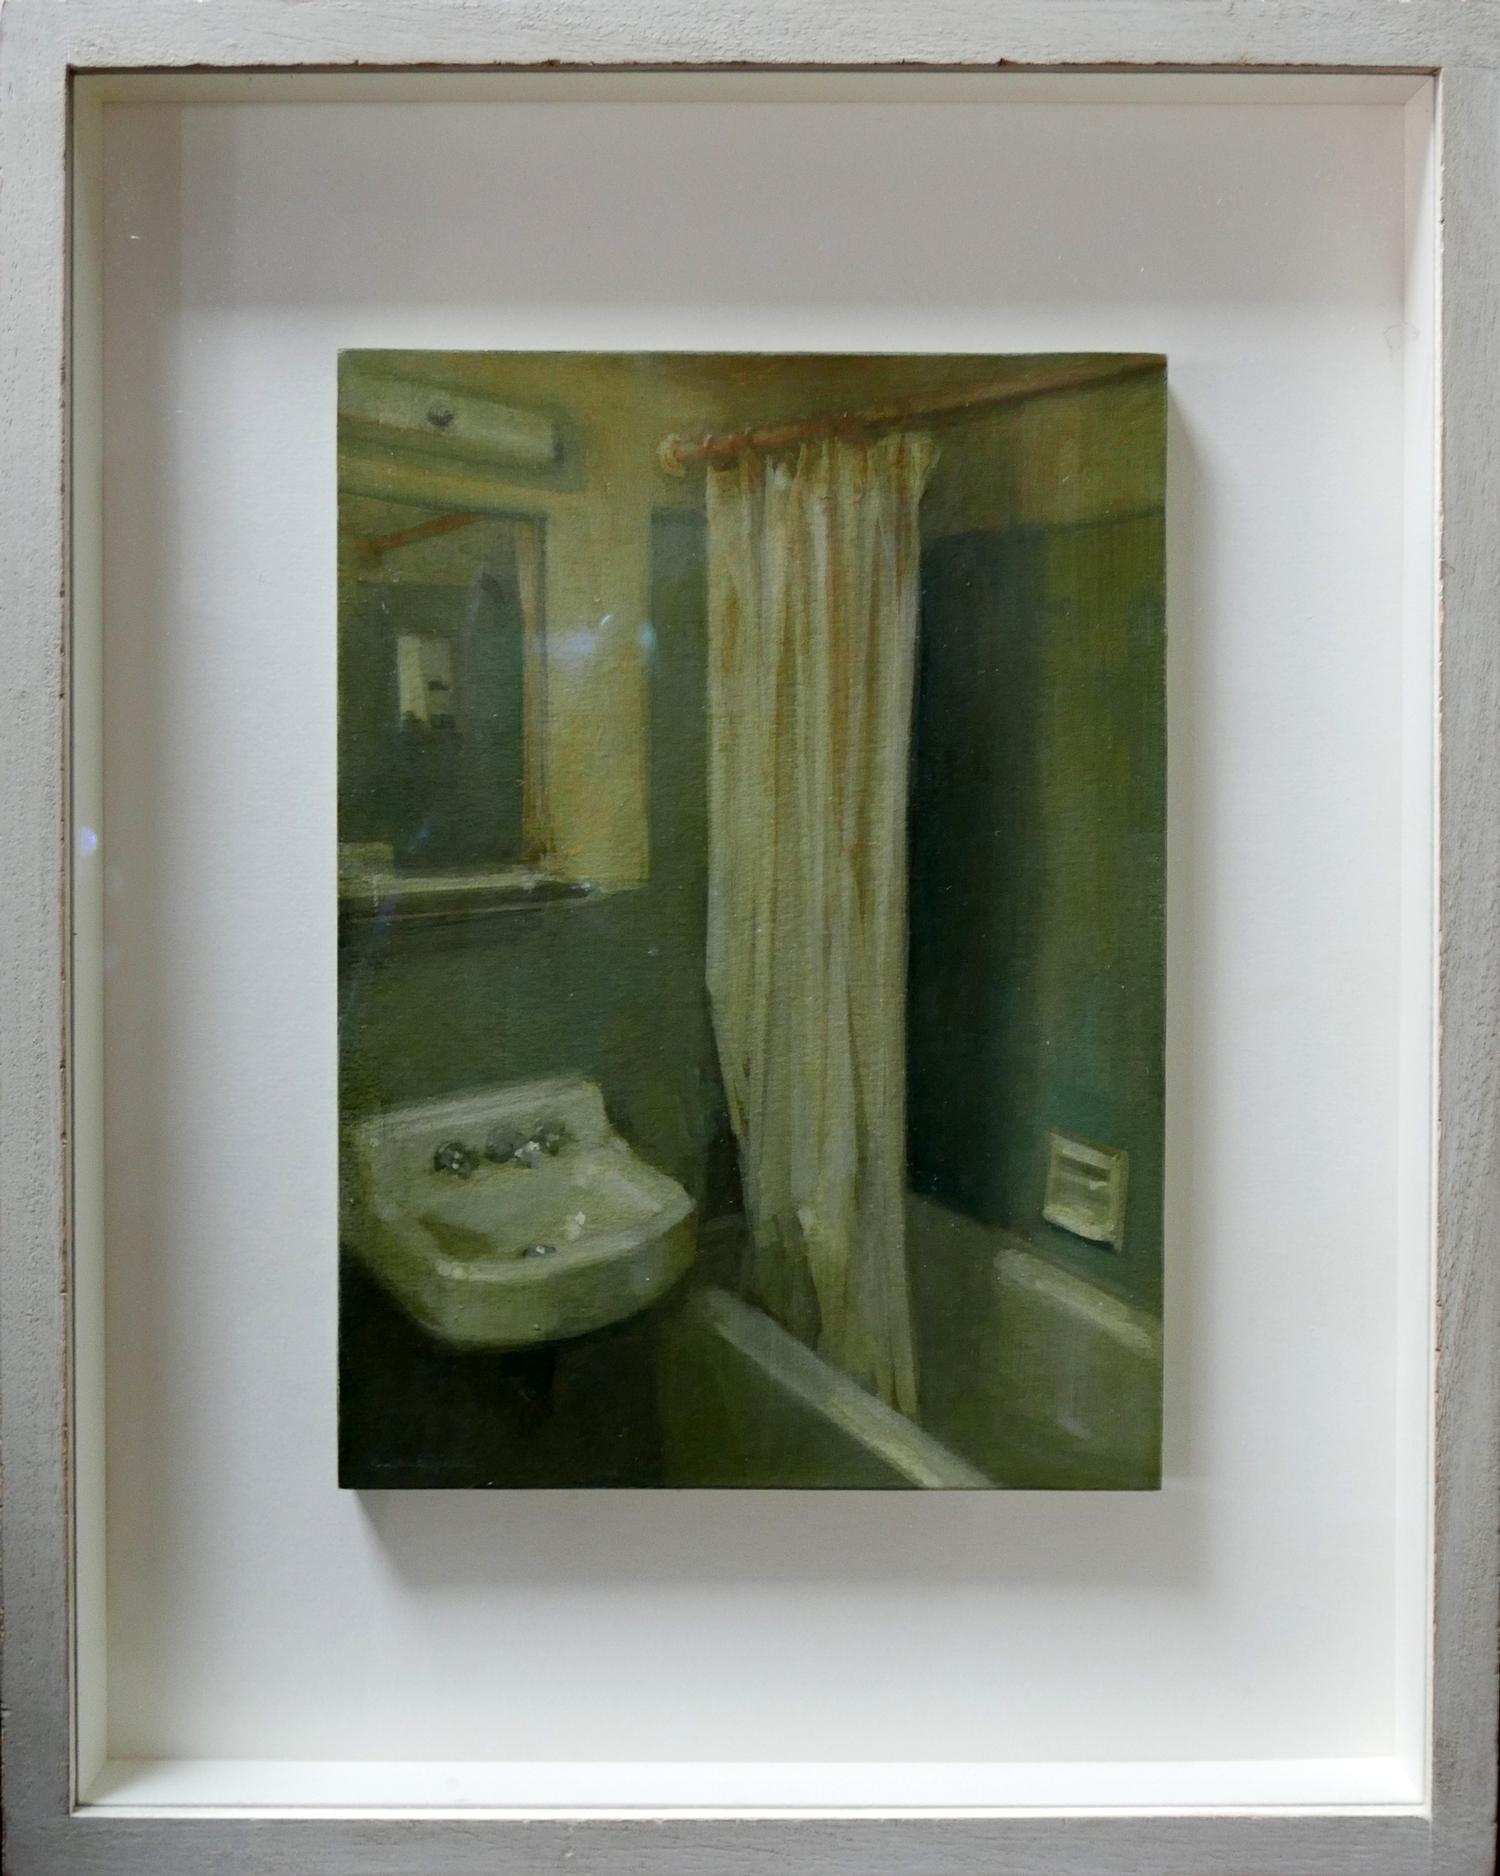 Ben Mclaughin (Contemporary), still life scene, oil on board, label to verso - Image 2 of 3